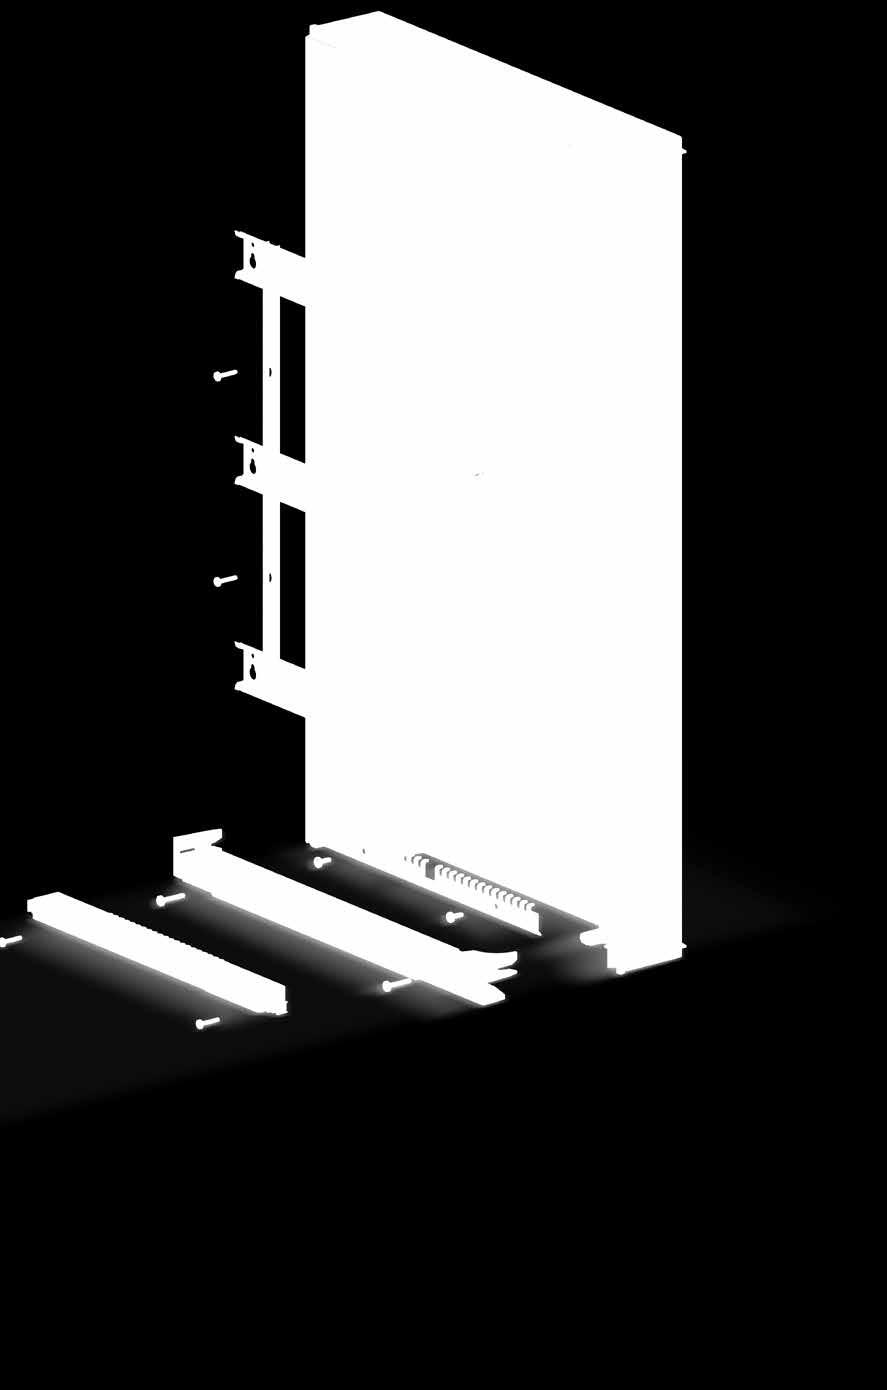 Bedradingsruimte Grote bedradingsruimte van mm tussen twee opeenvolgende DIN-rails. Plaatsing van 18 modules per rij.